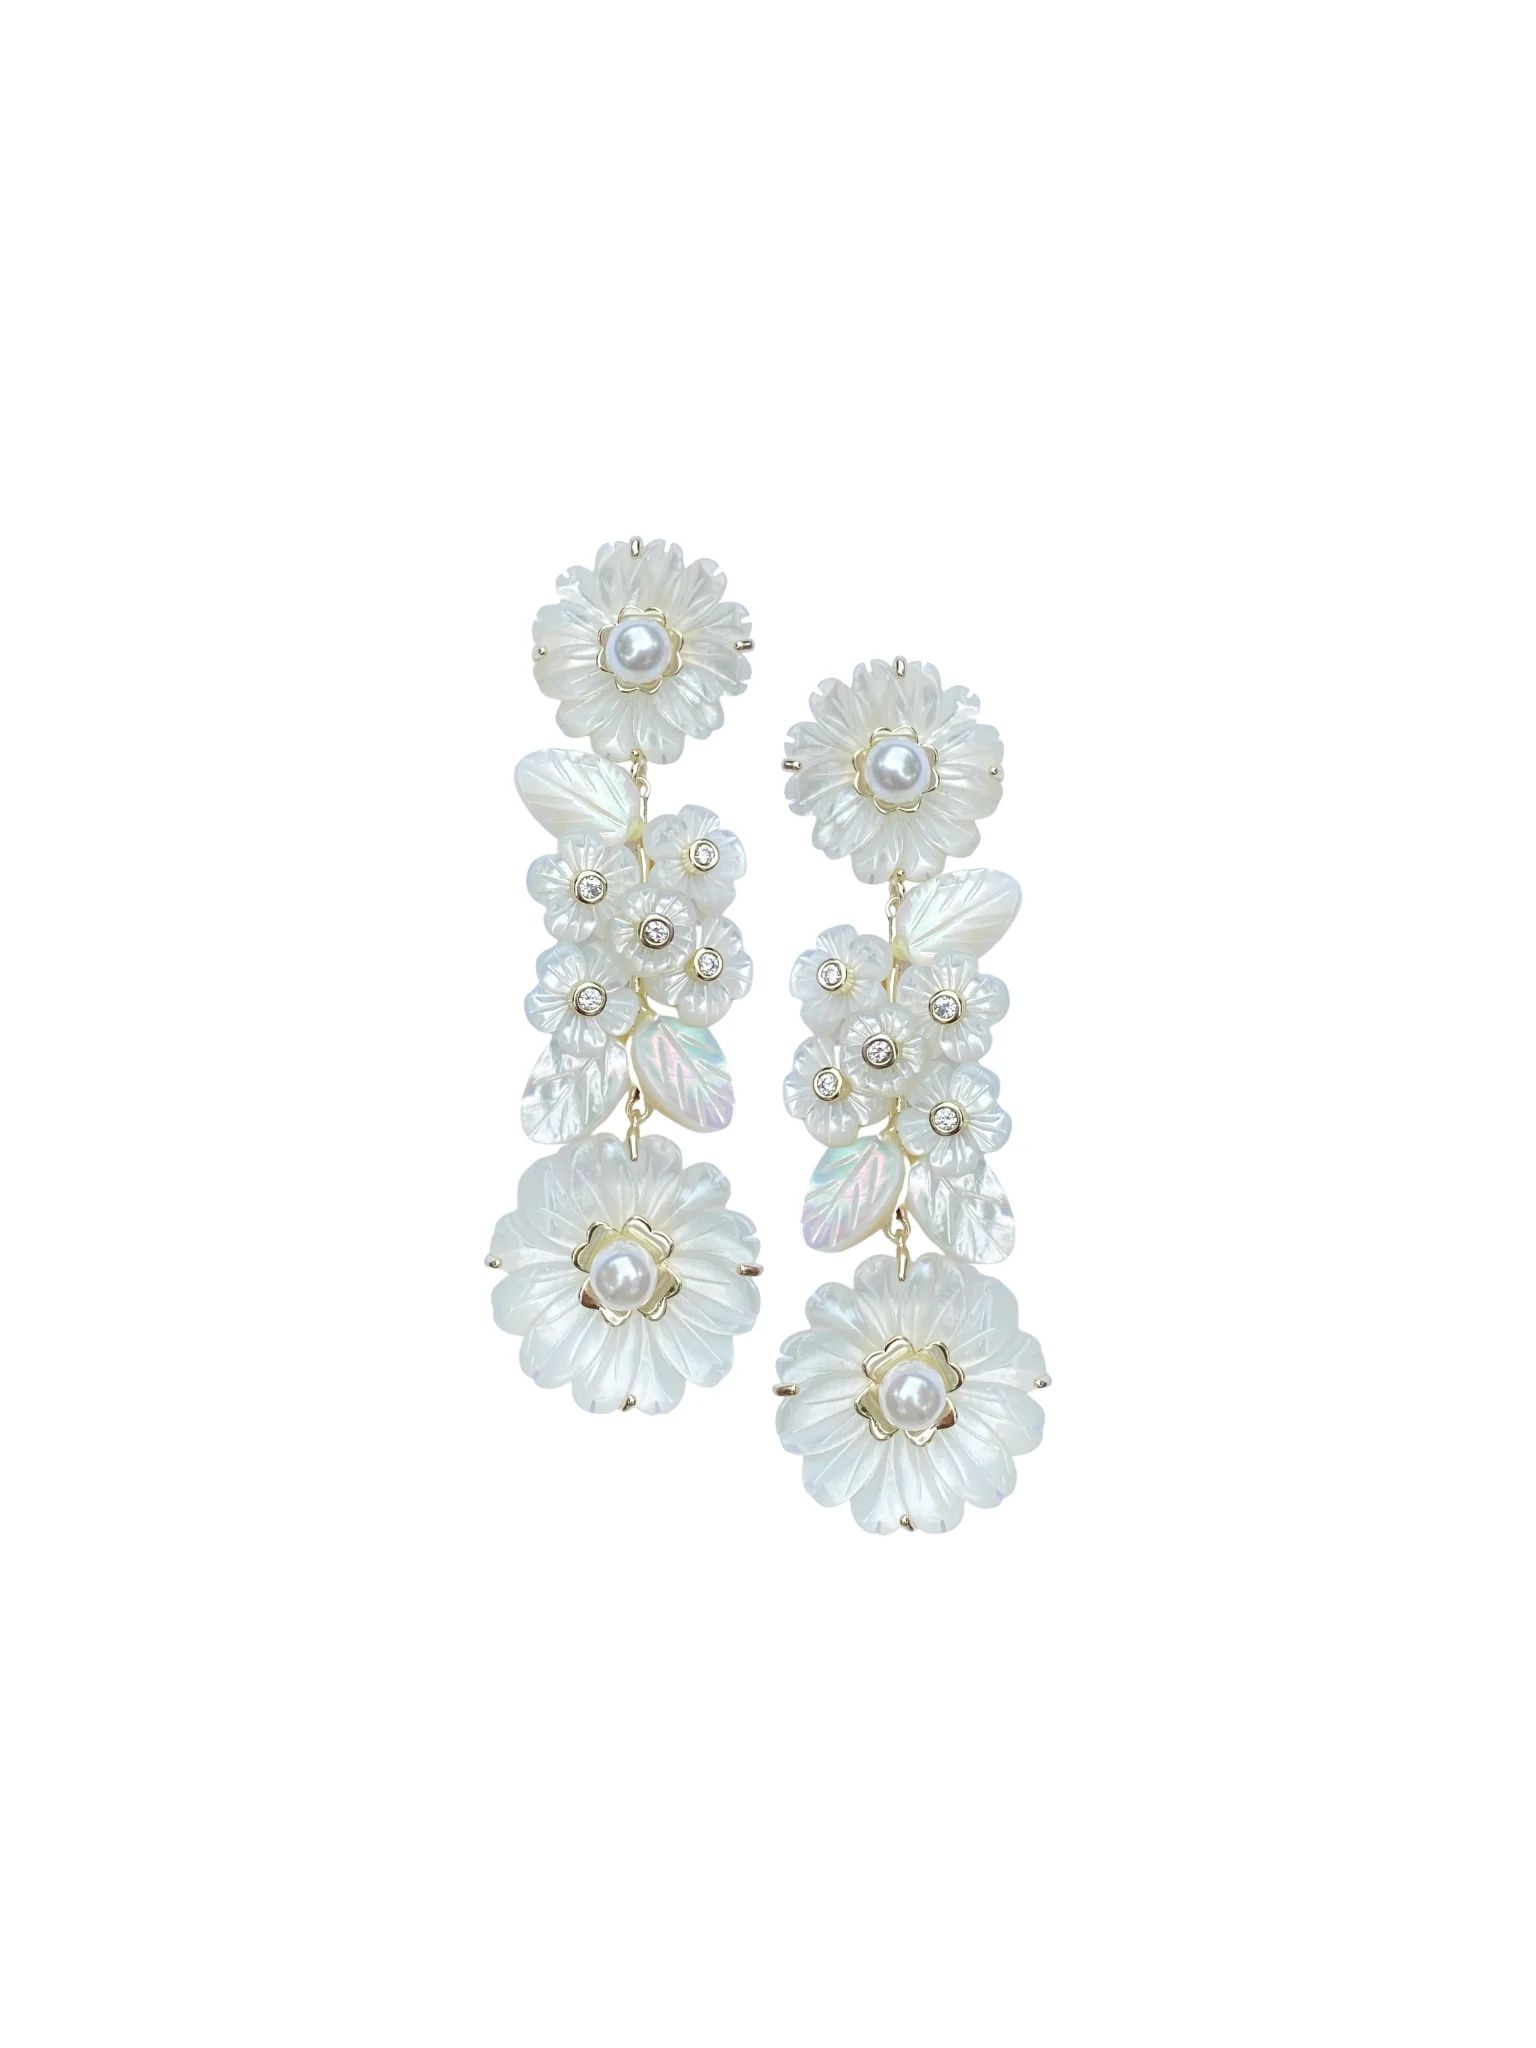 mother of pearl + flowers + pearl | Nicola Bathie Jewelry